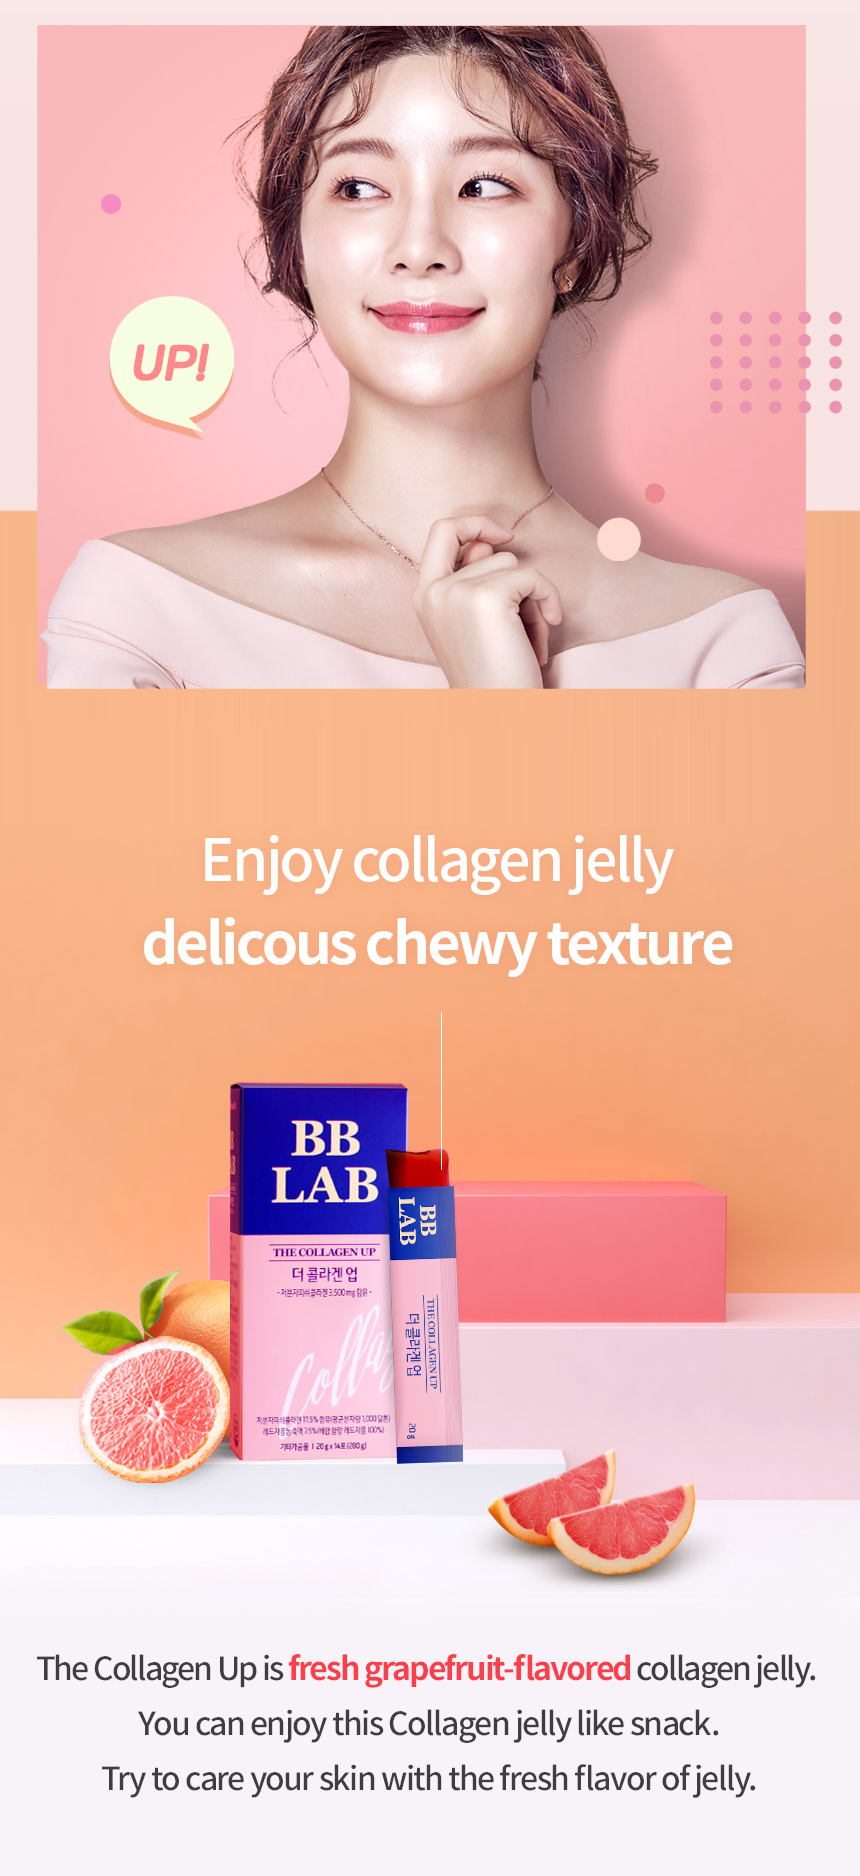 BB LAB - The Collagen Up (20g x 14 units)